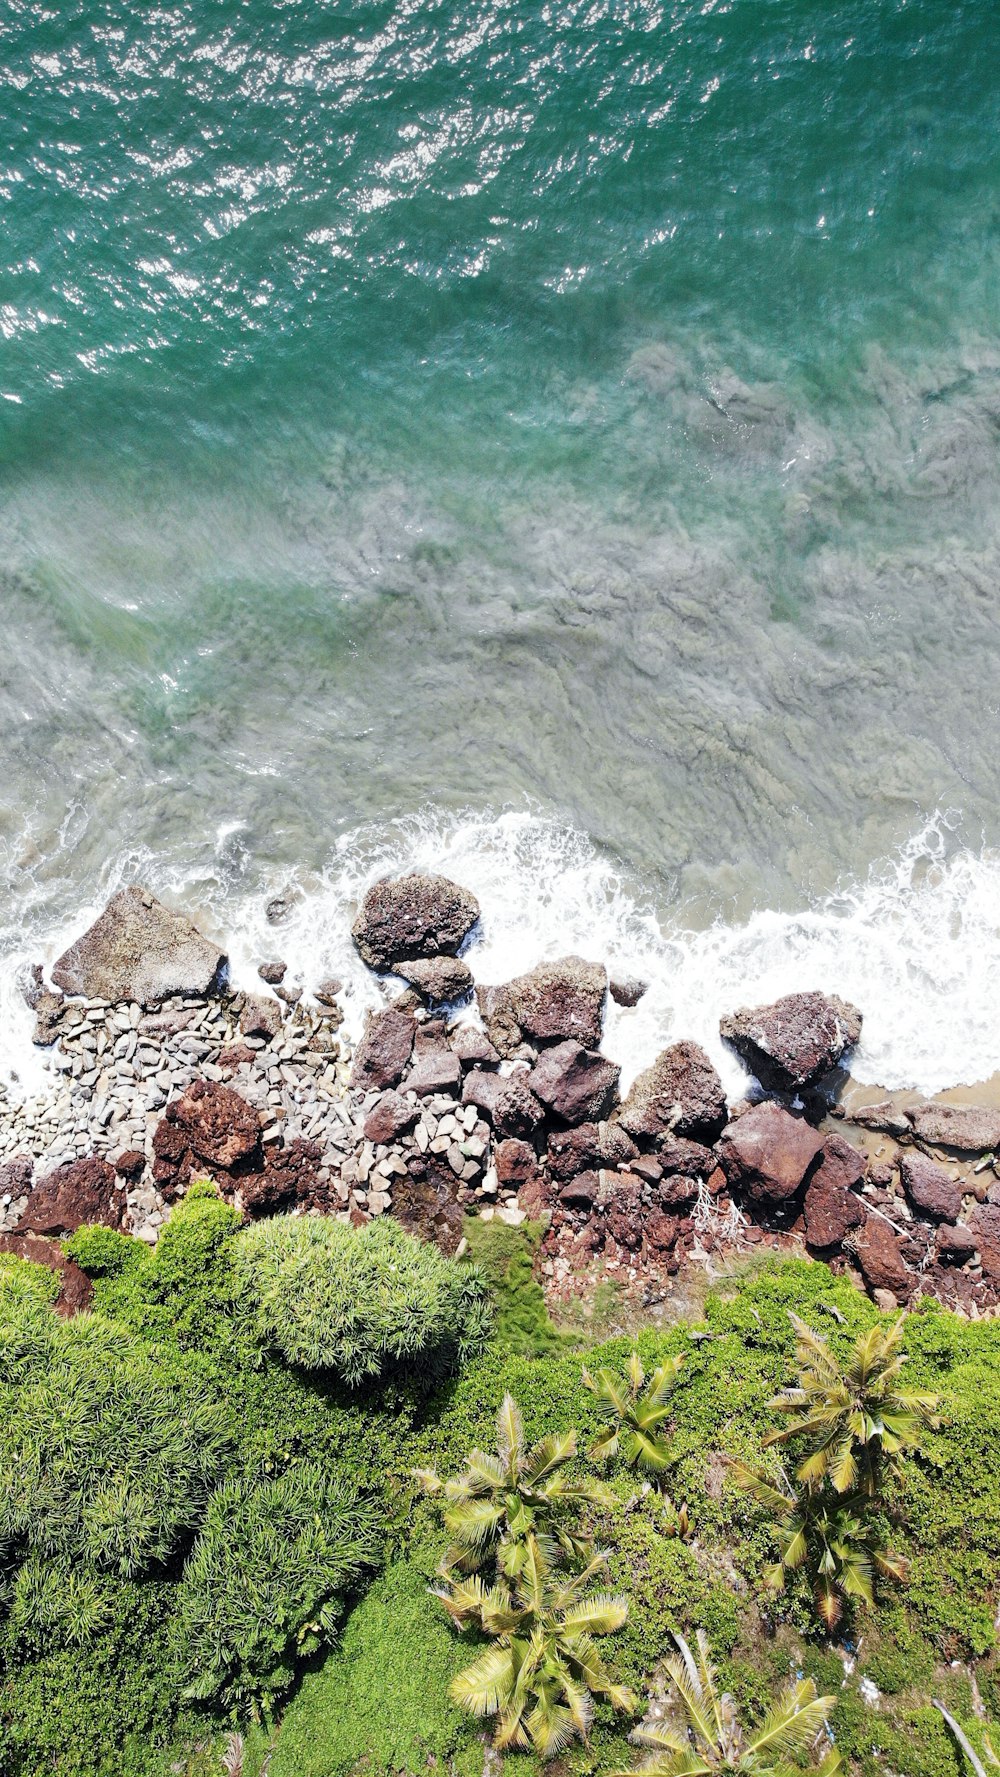 brown rocks near body of water during daytime